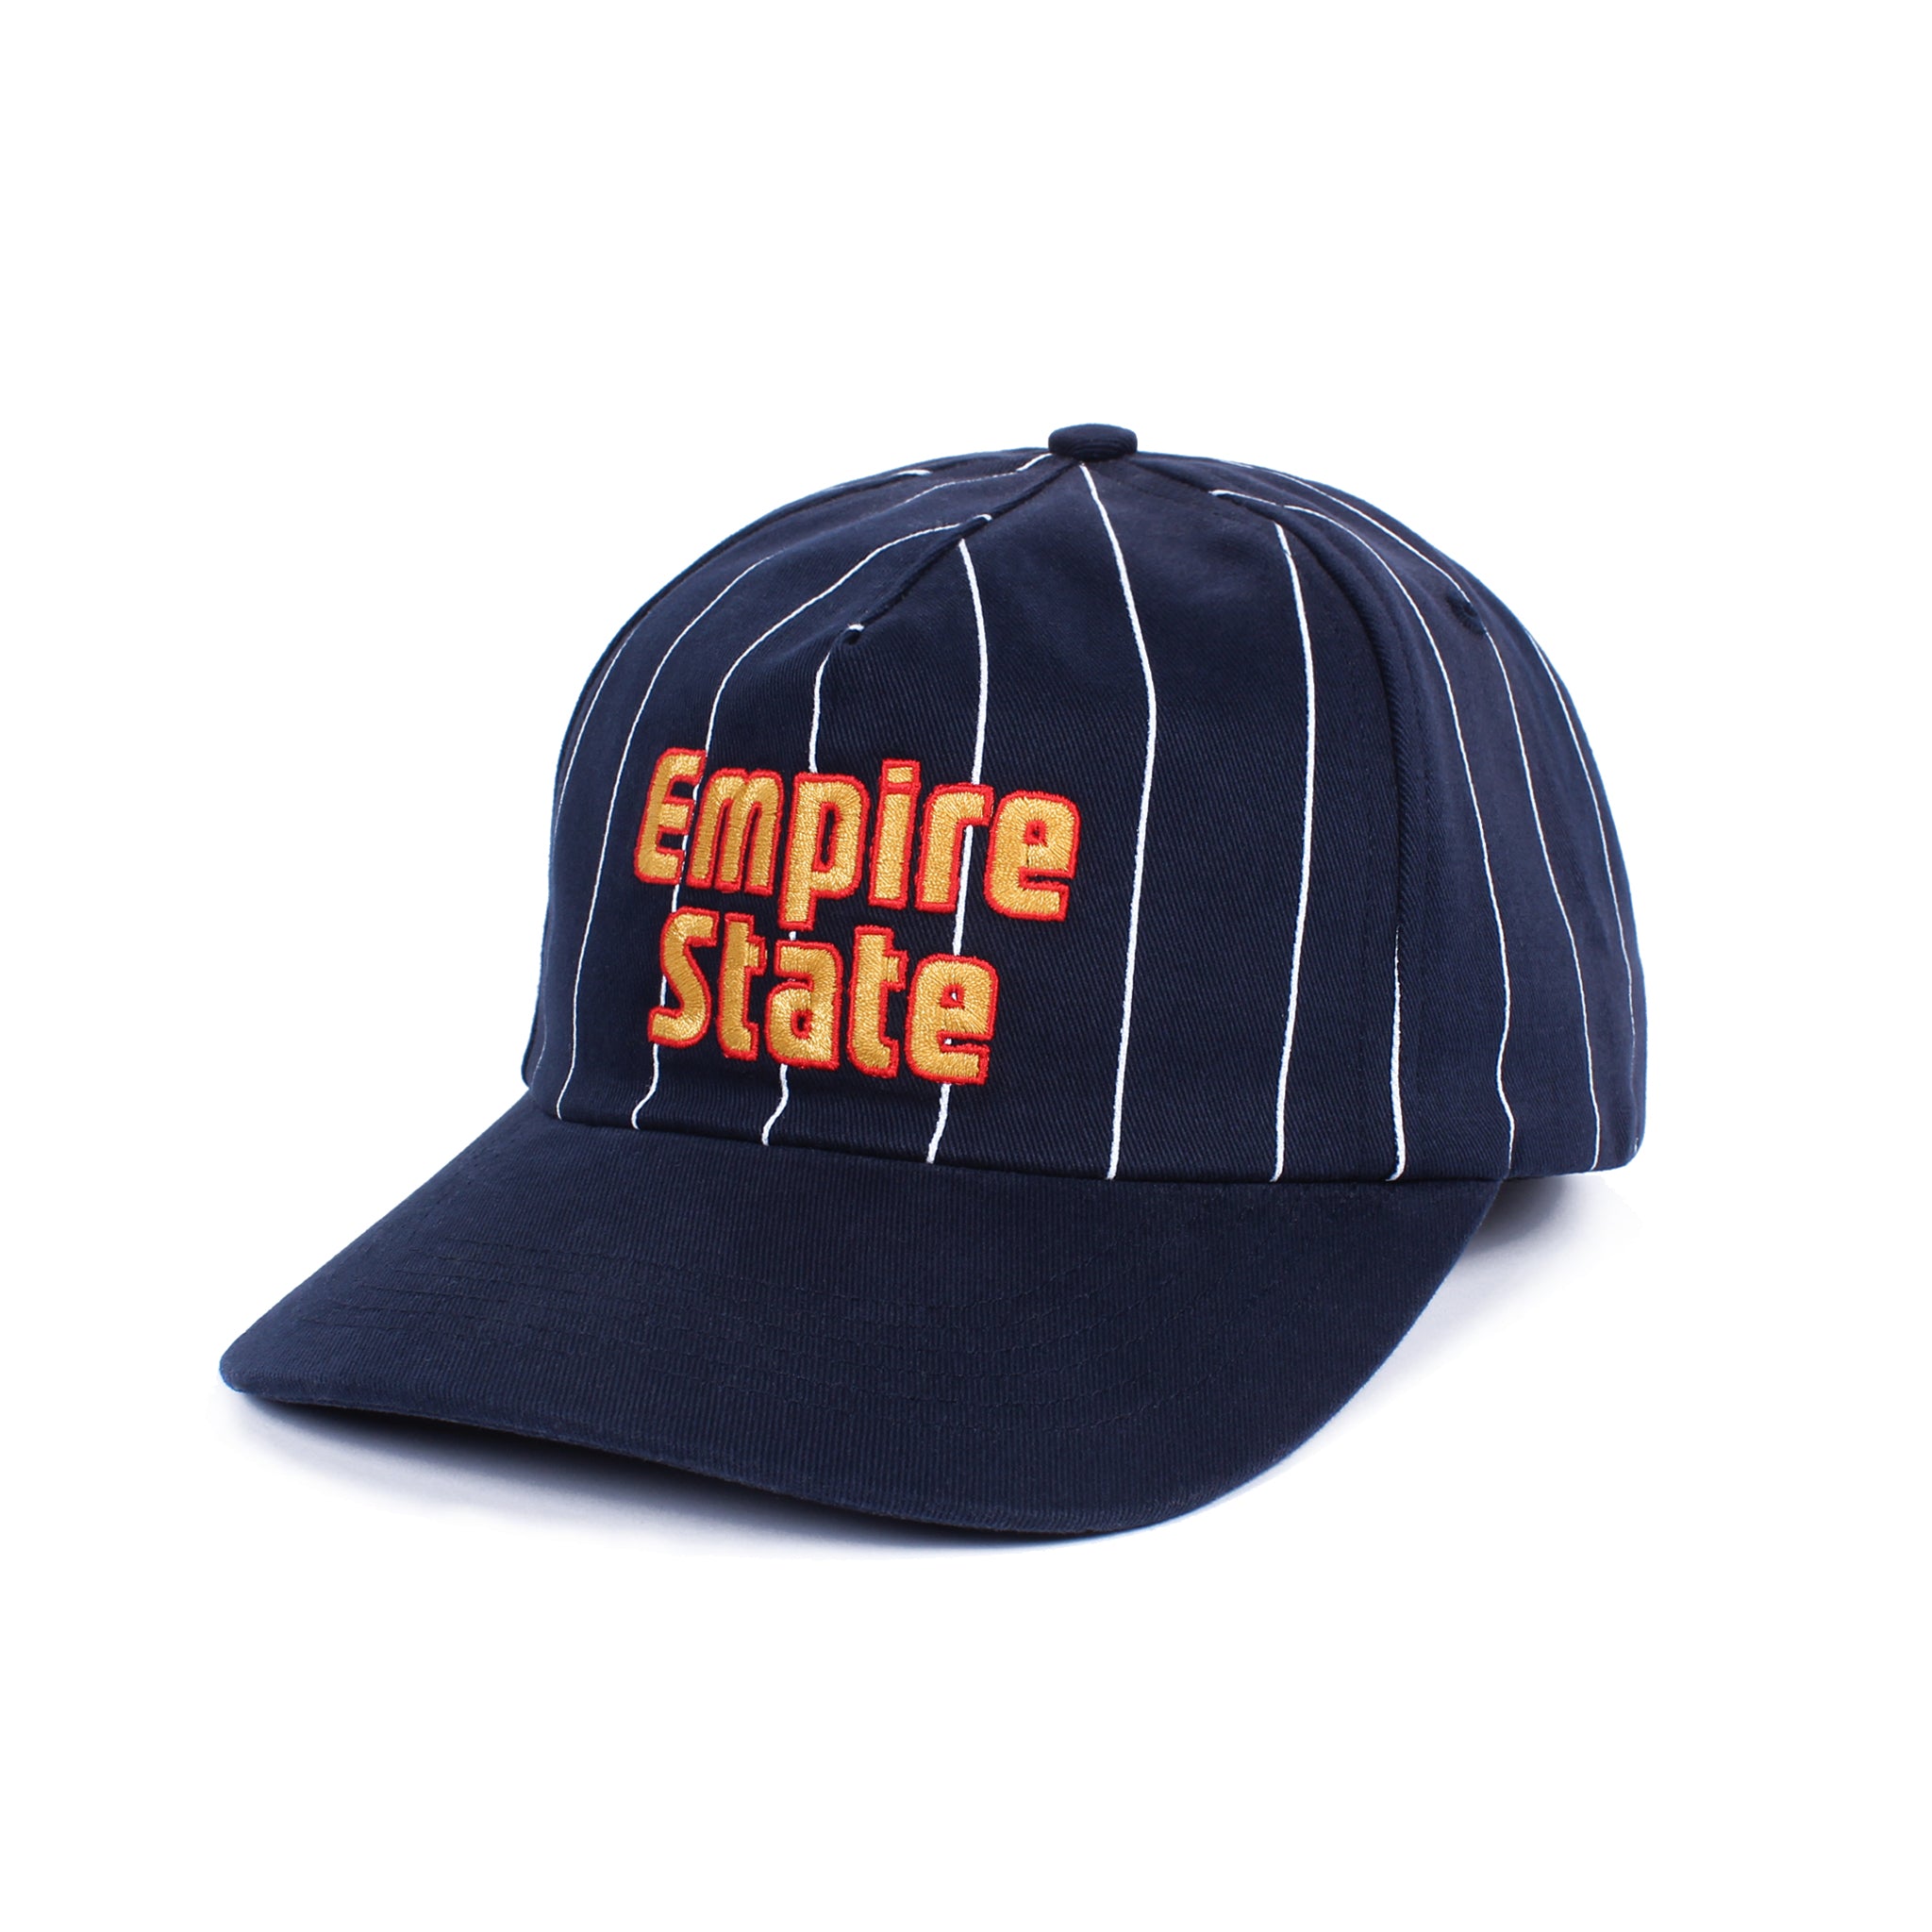 Empire State Snapback - Navy